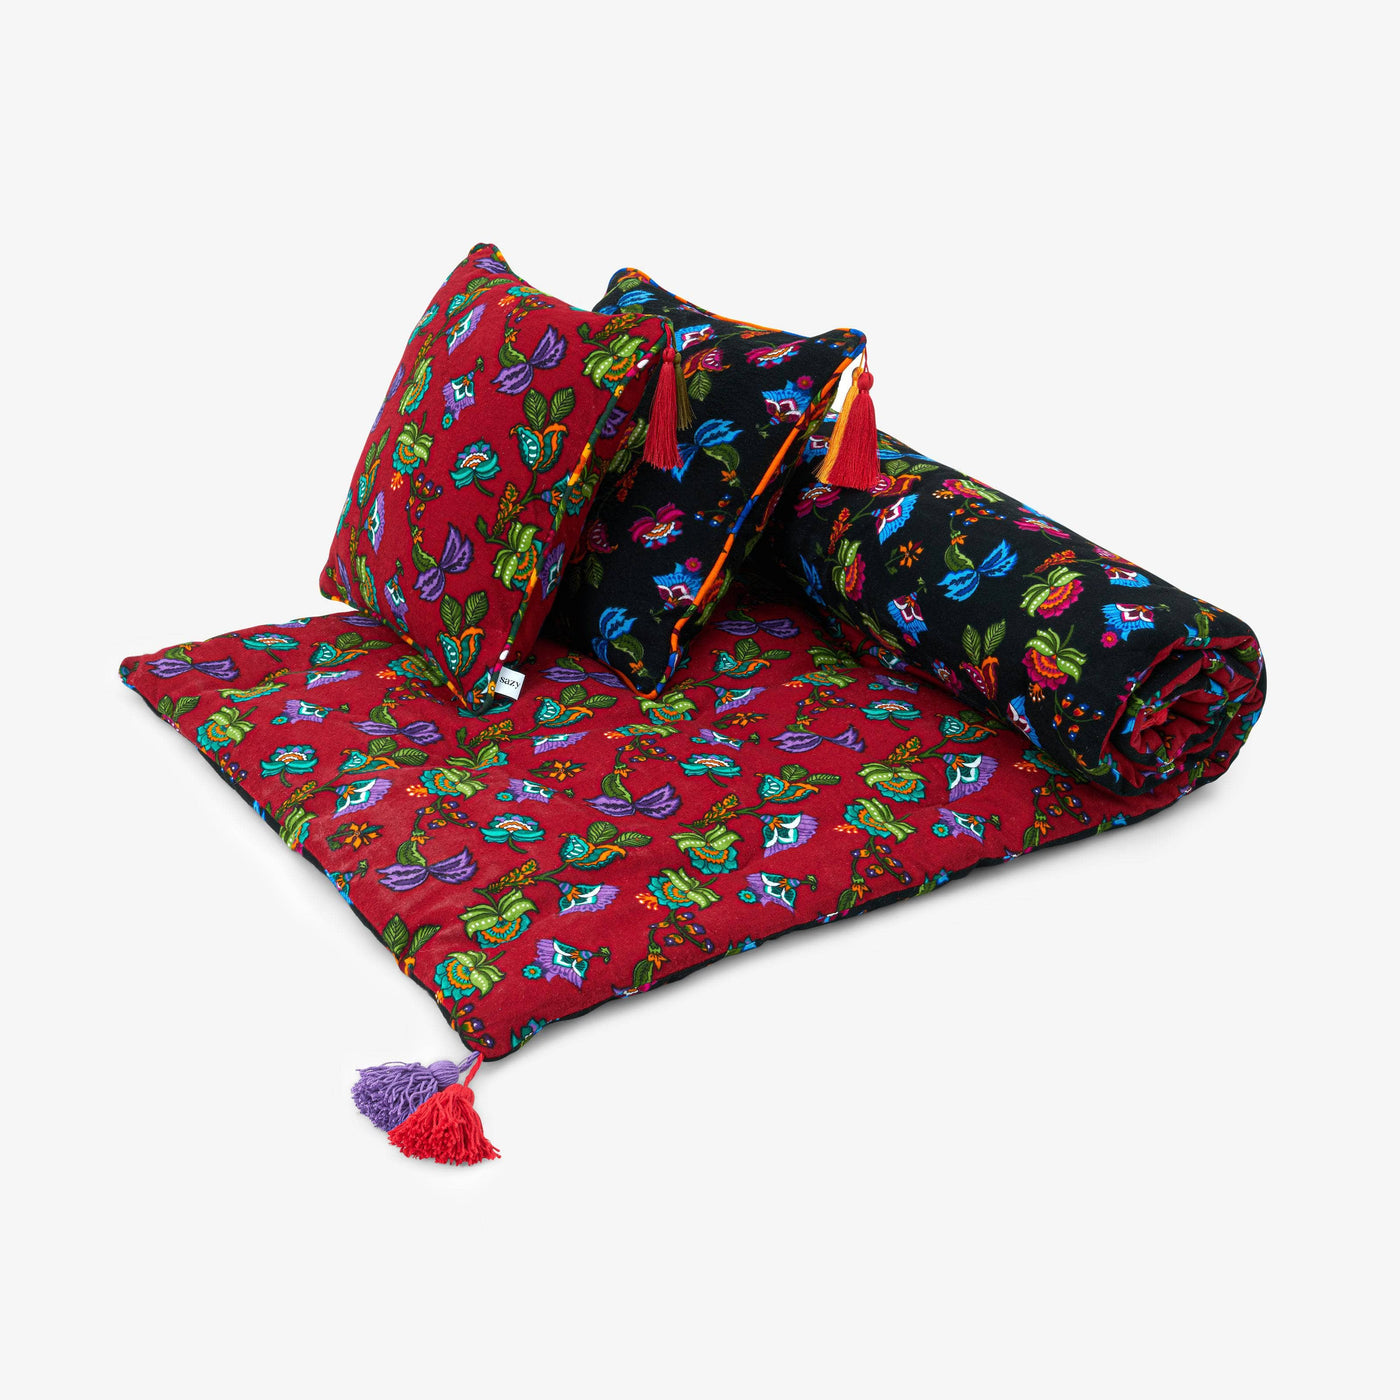 Leono Bolster Cushion, Red, 70x200 cm Cushions sazy.com